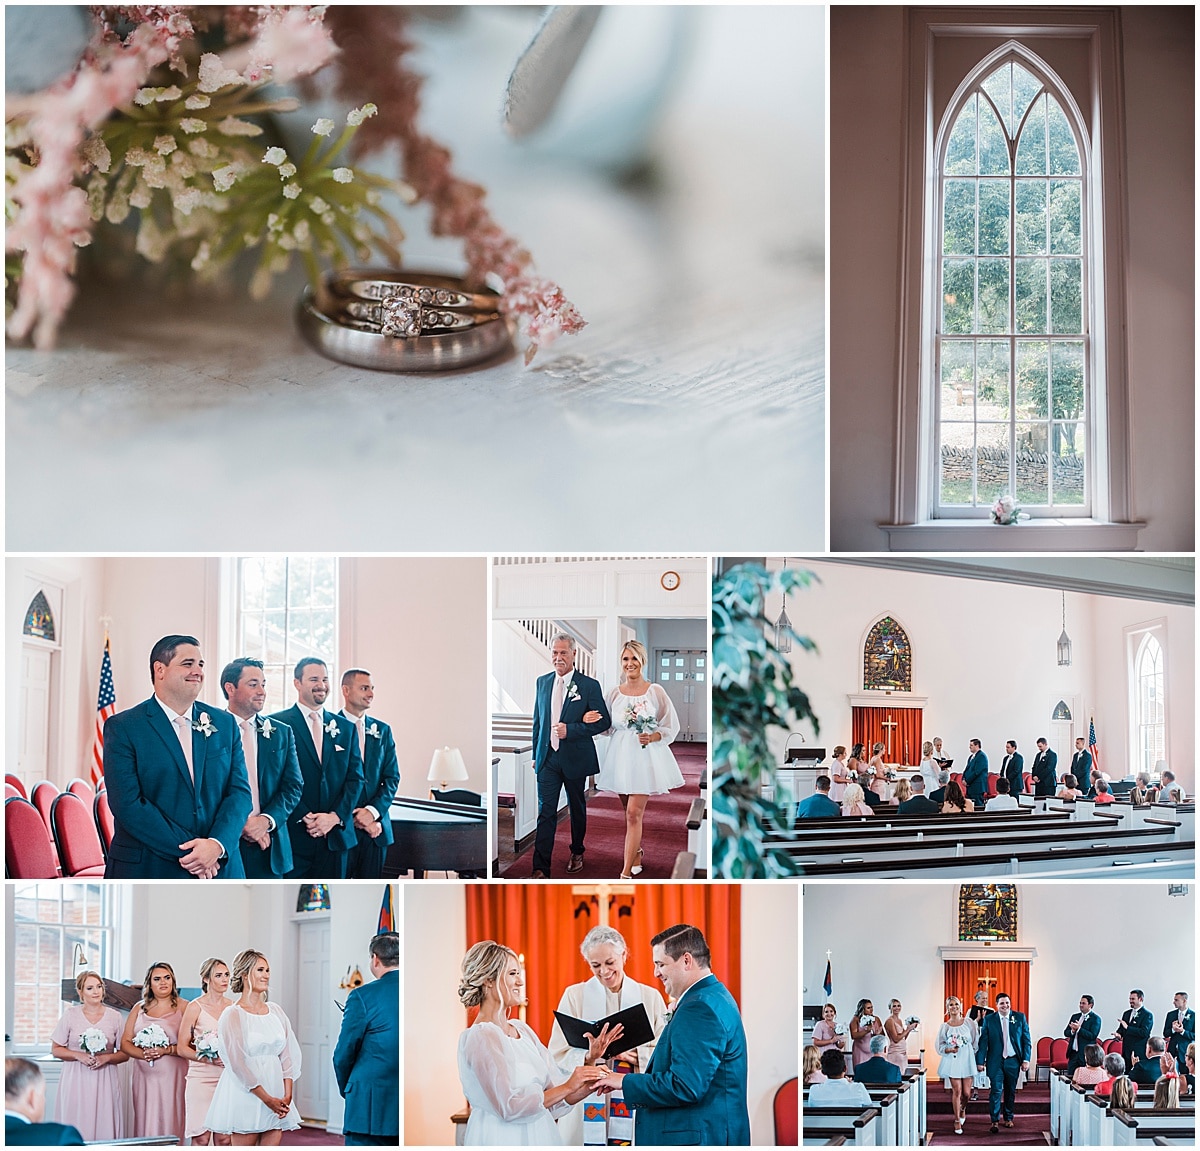 Dublin Community Church Wedding Ceremony